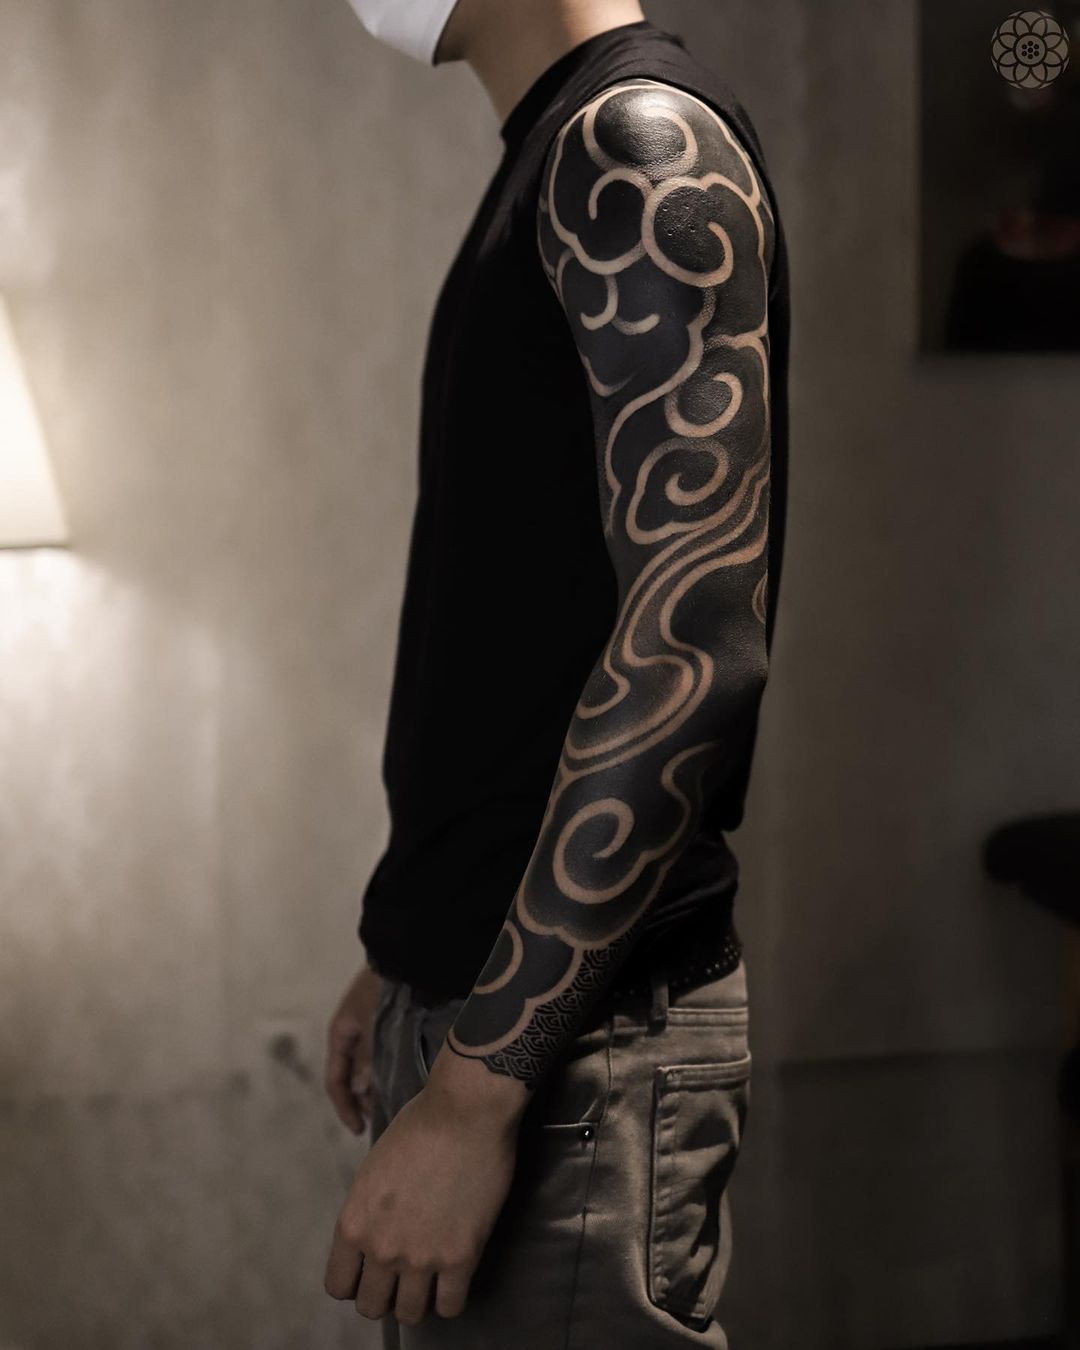 Black Cloud Tattoo on Arm